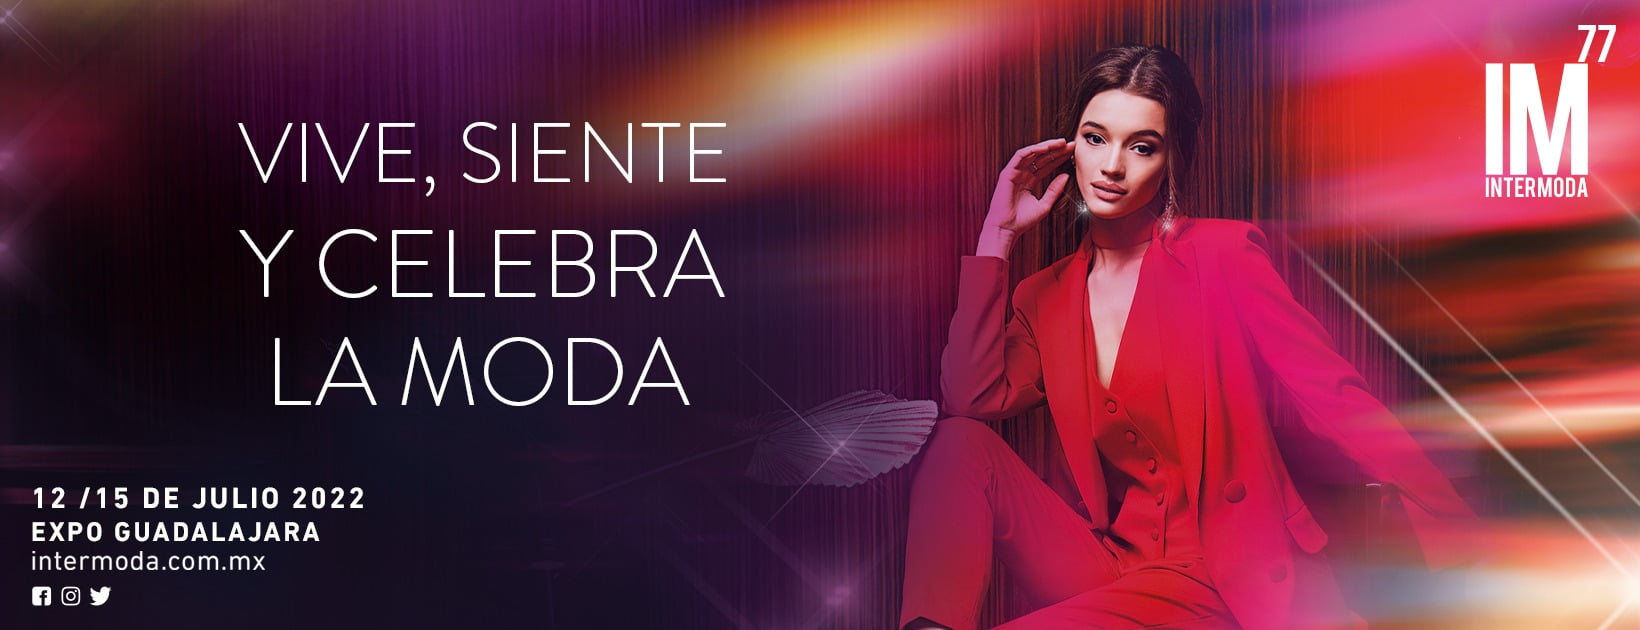 Intermoda 77 fortalecerá a emprendedores, diseñadores y fabricantes mexicanos